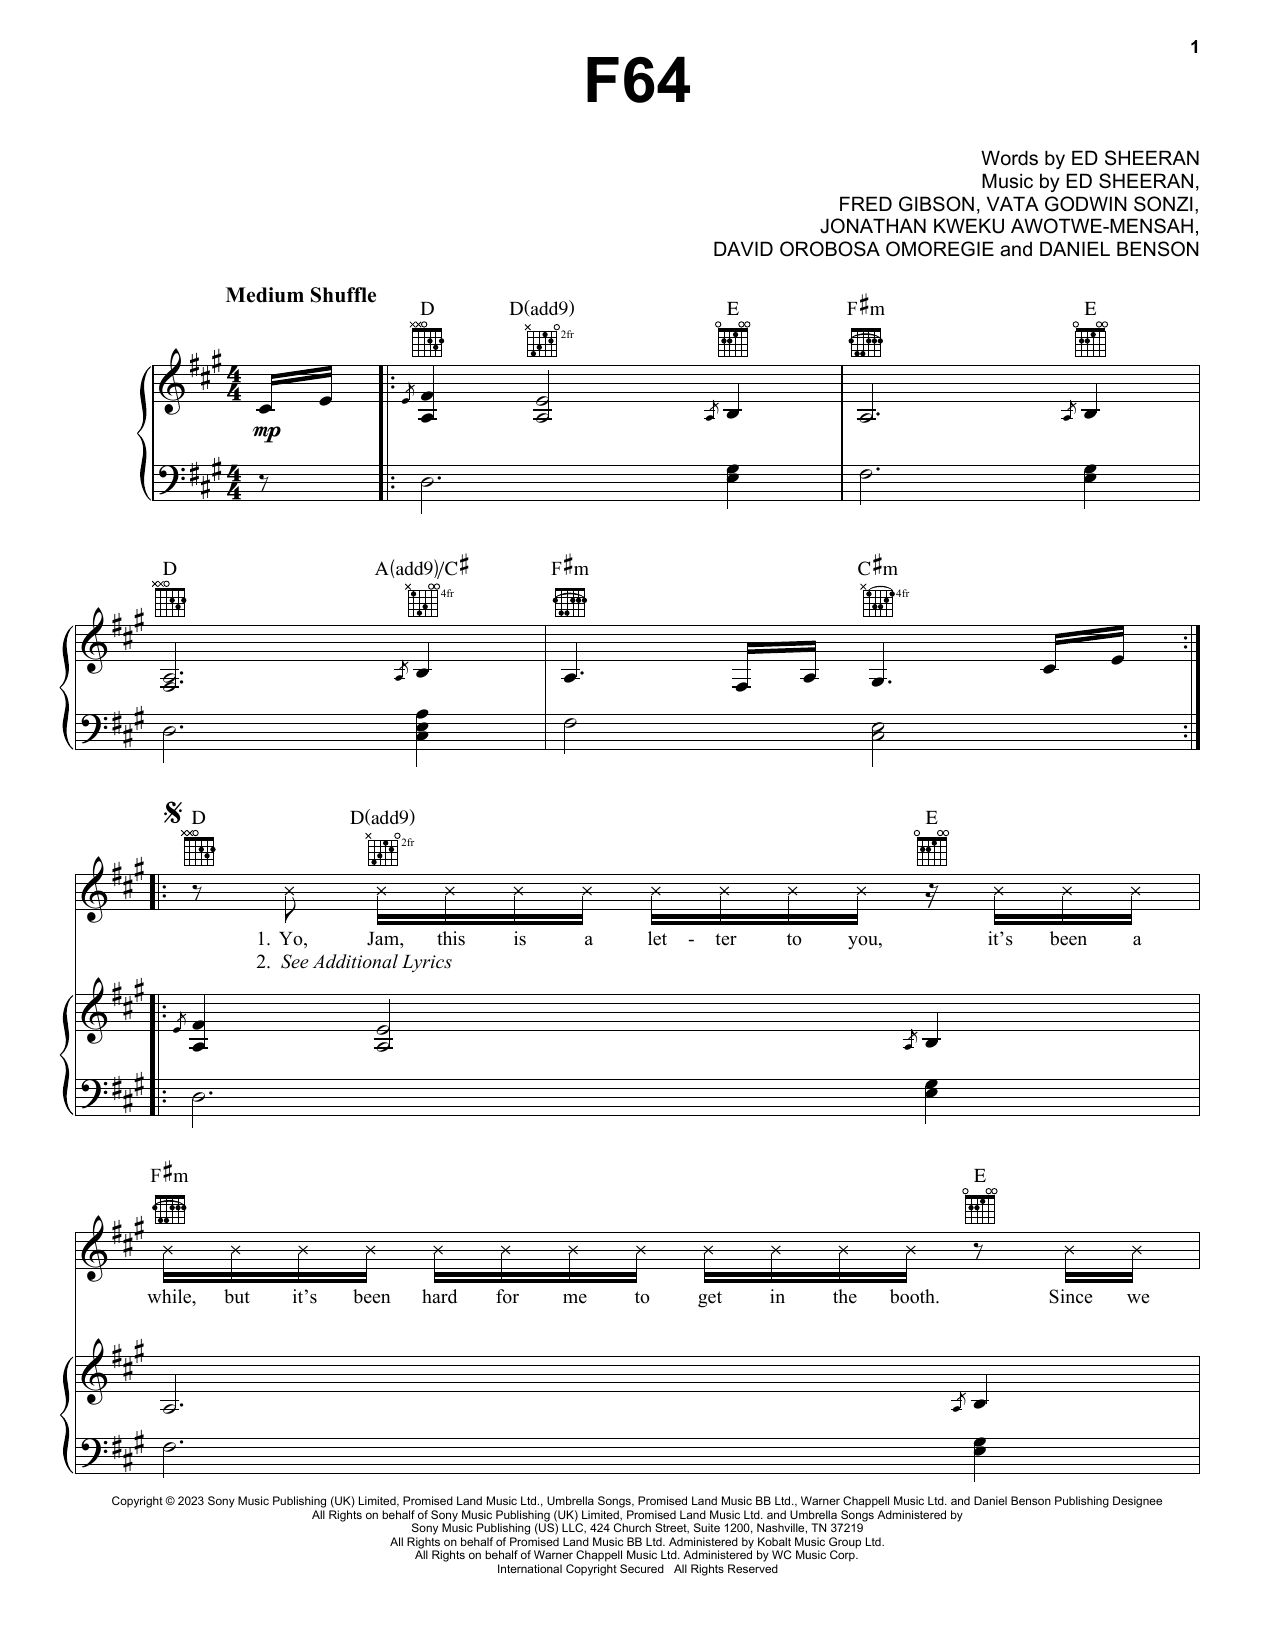 Ed Sheeran F64 Sheet Music Notes & Chords for Piano, Vocal & Guitar Chords (Right-Hand Melody) - Download or Print PDF